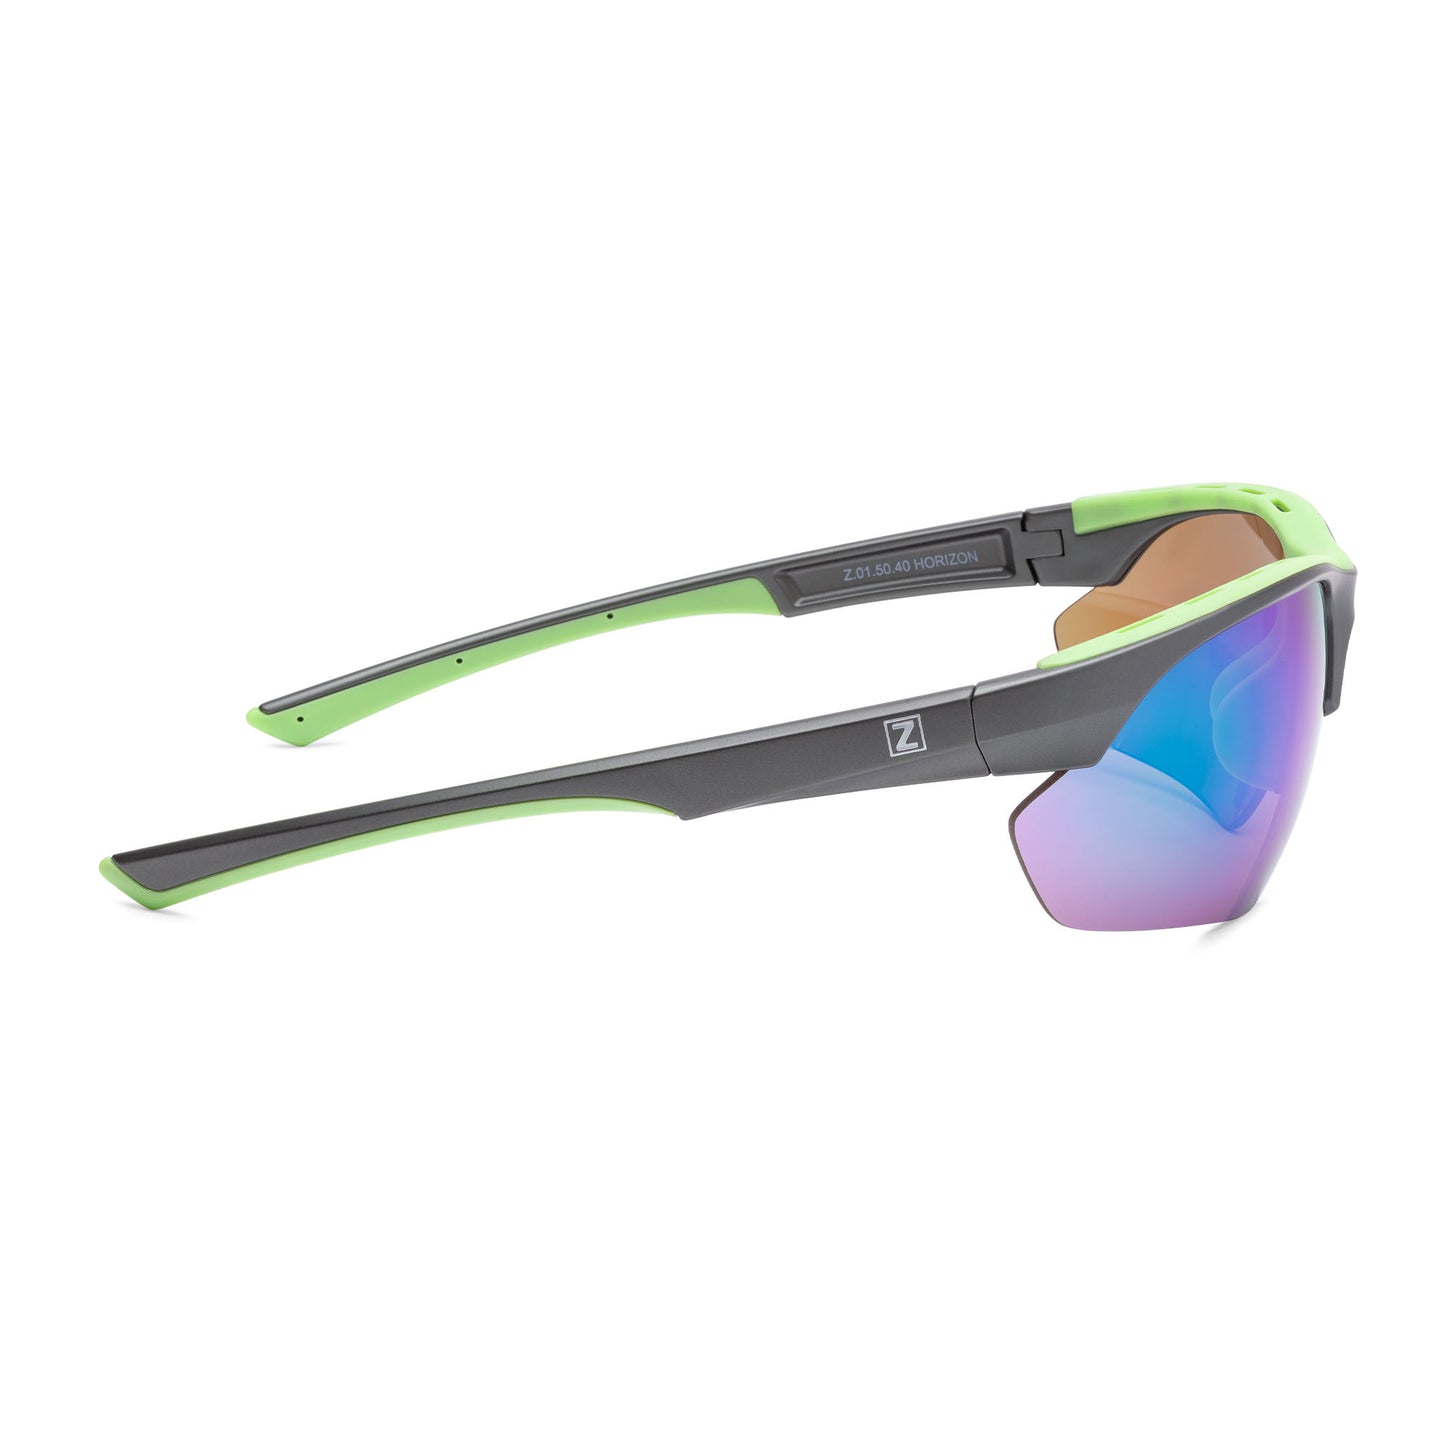 Horizon - UV-Proof - Sport Sunglasses